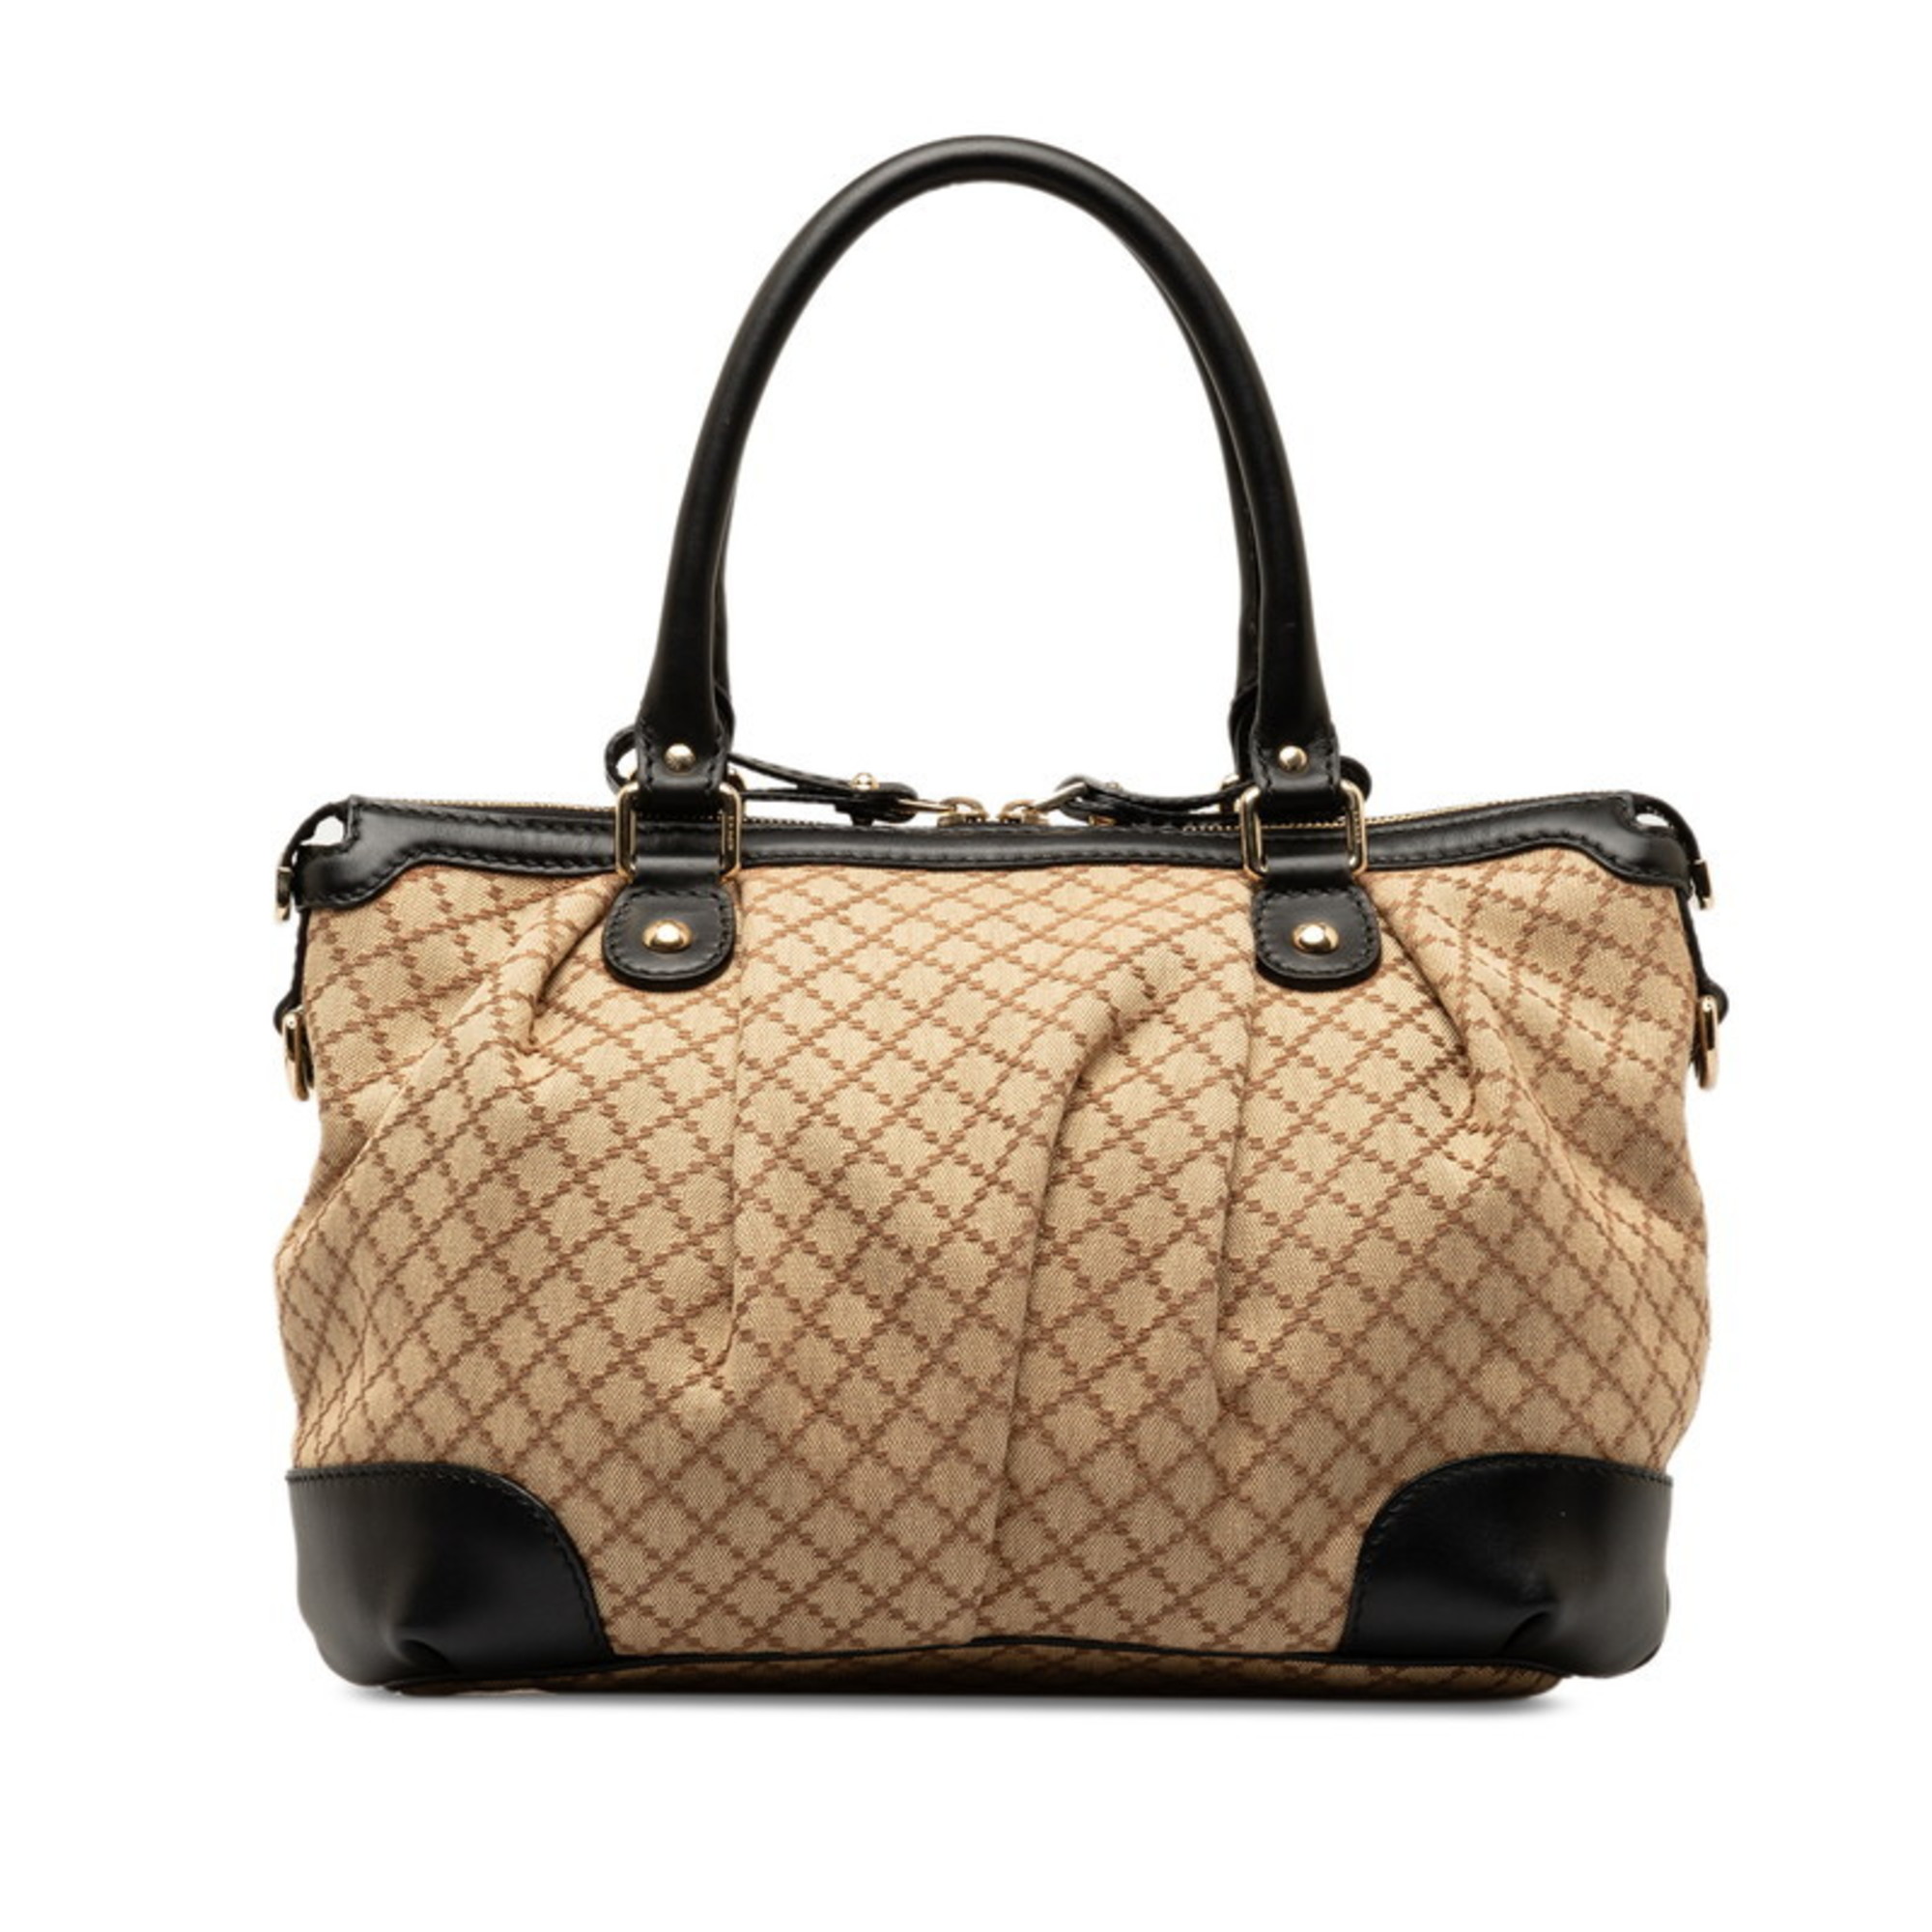 Gucci Diamante Sukey Handbag Shoulder Bag 247902 Beige Black Canvas Leather Women's GUCCI